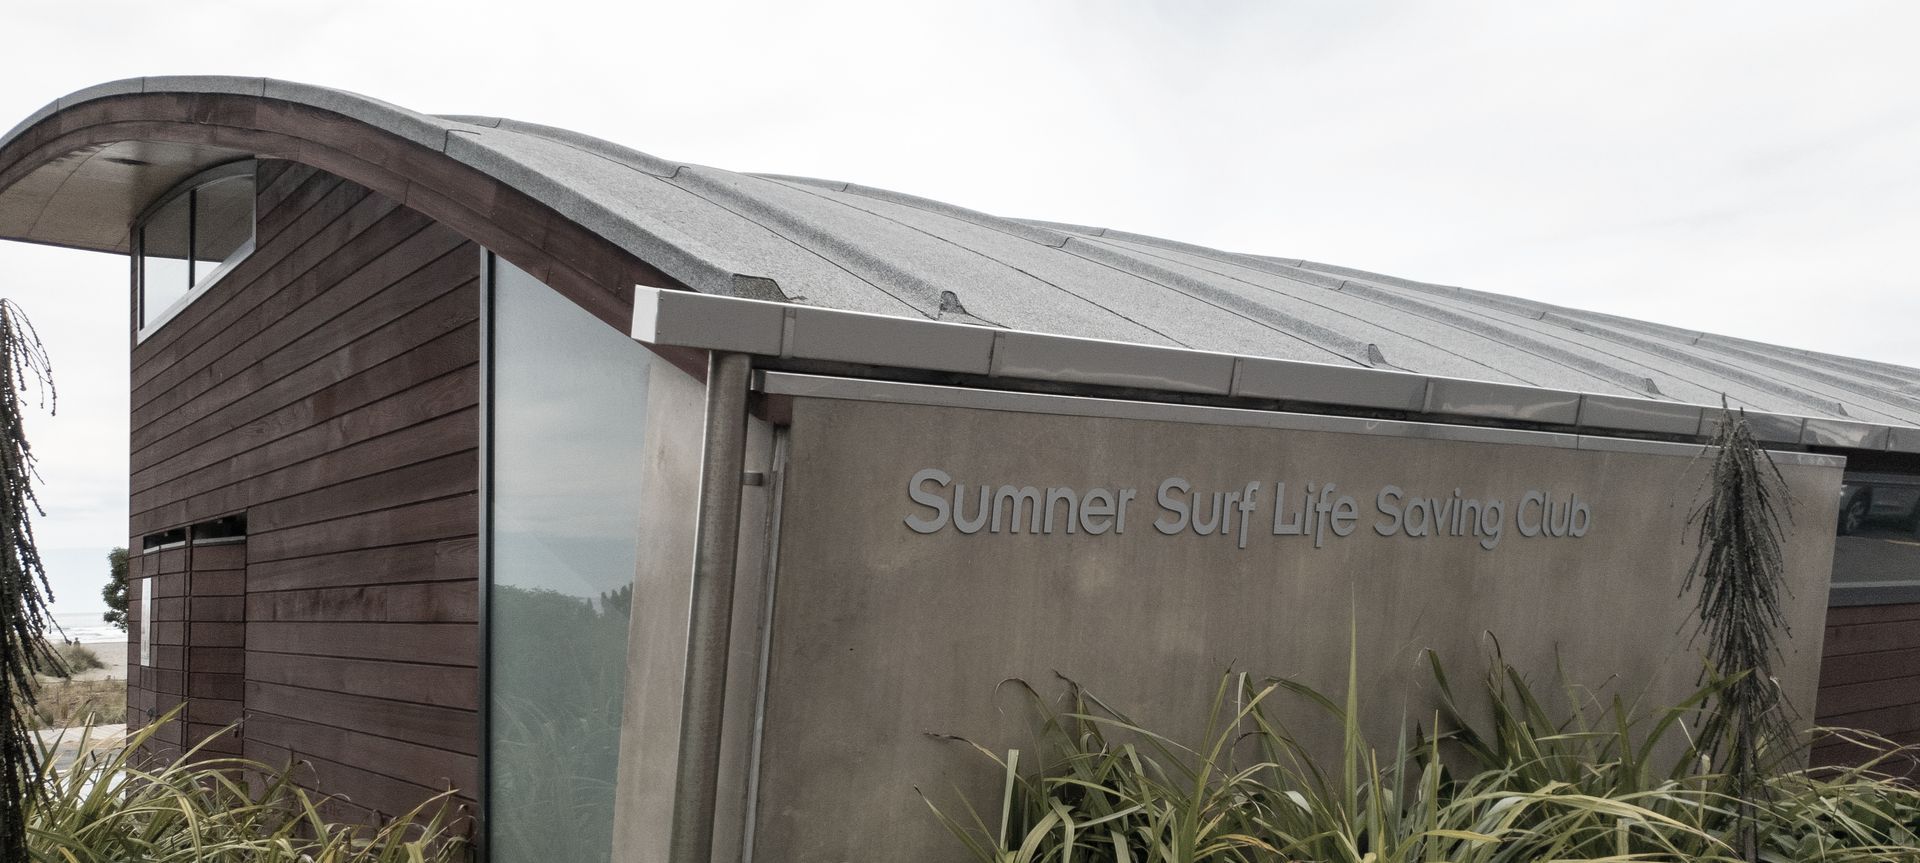 Sumner Surf Life Saving Club banner